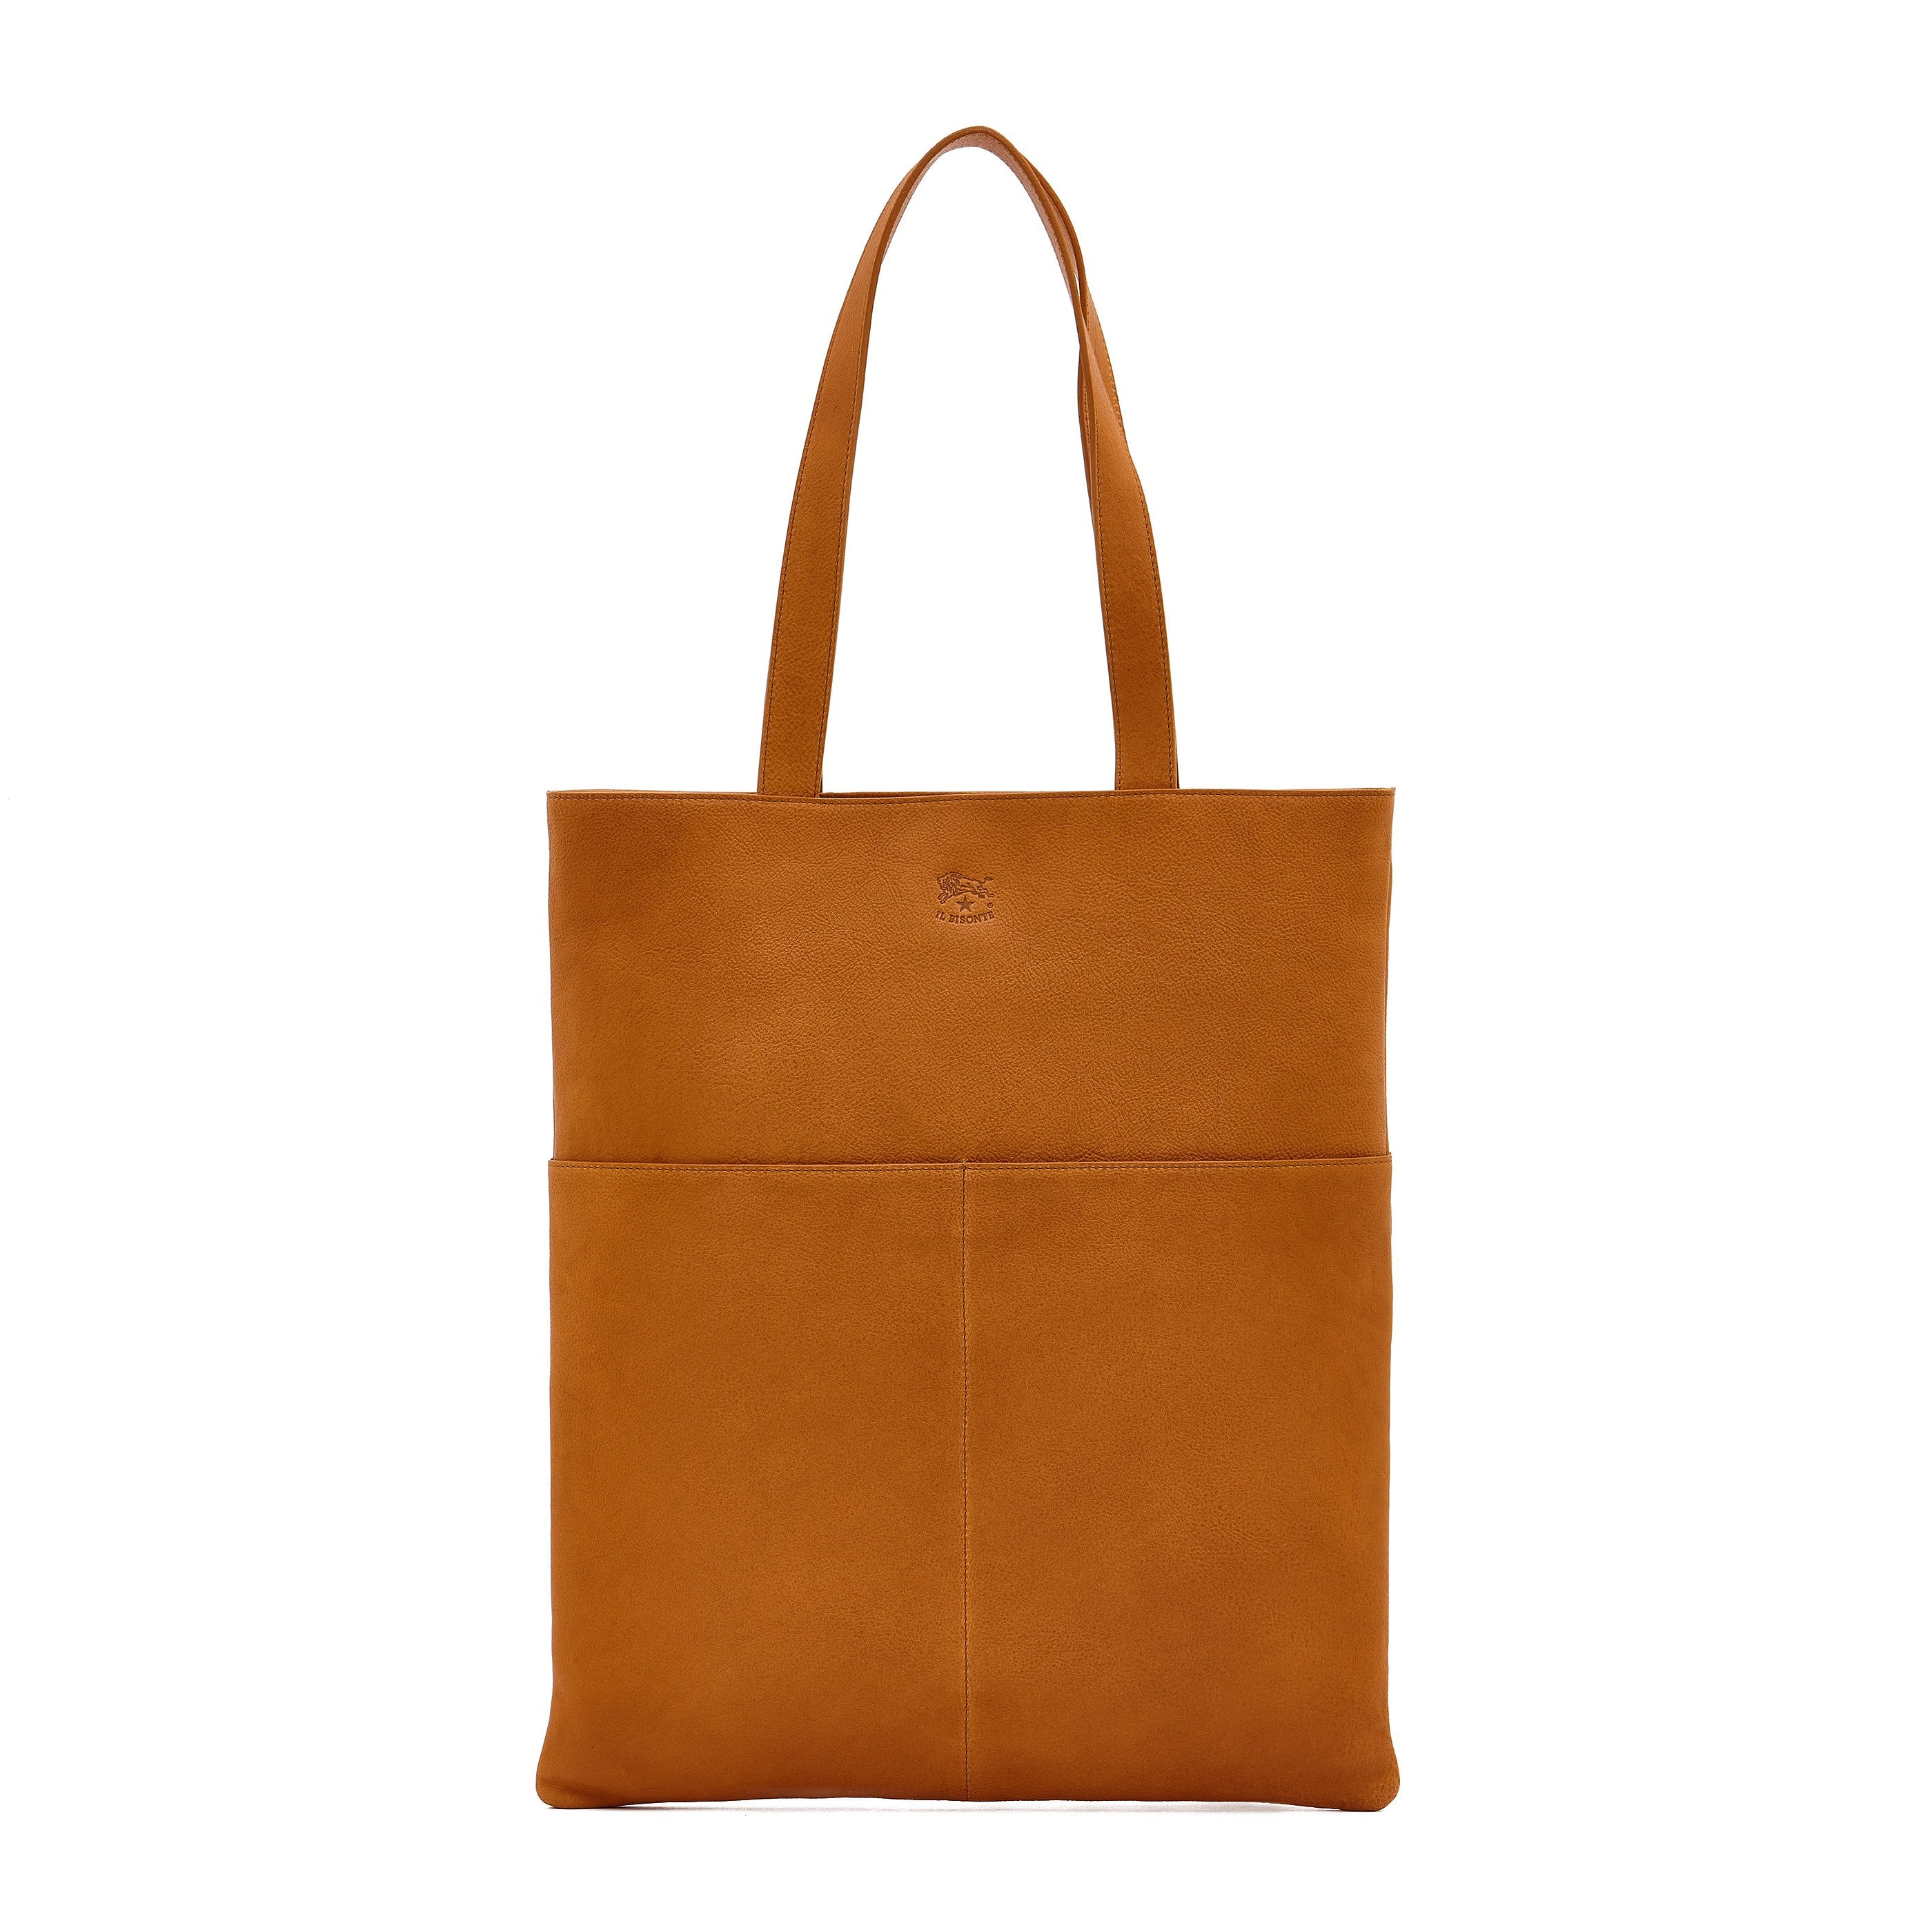 Oriuolo | Men's tote bag in vintage leather color natural – Il Bisonte